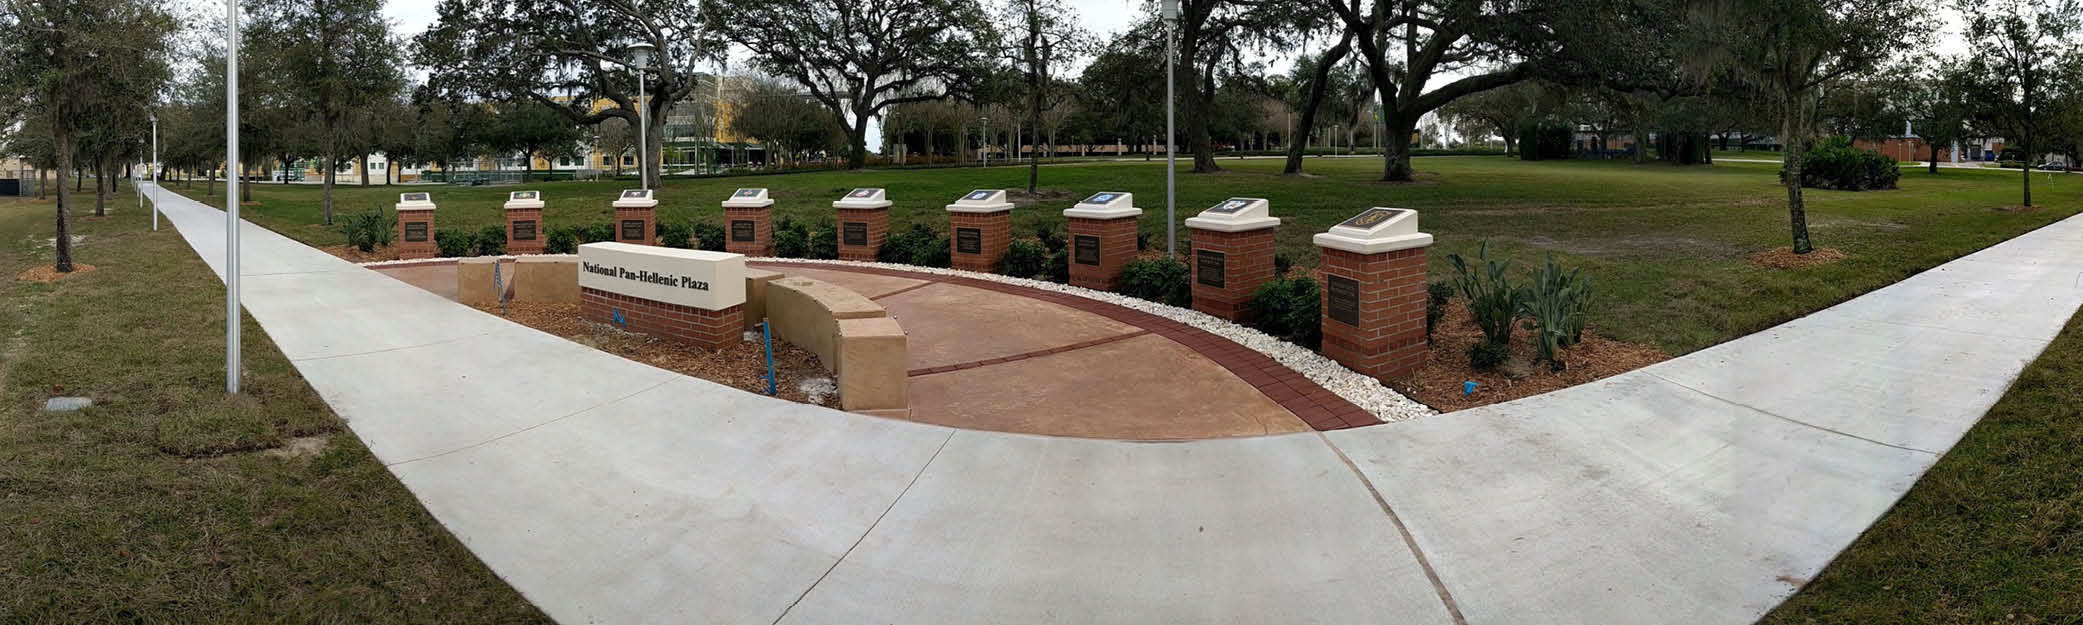 University of South Florida's "Monumental" NPHC Plaza Project